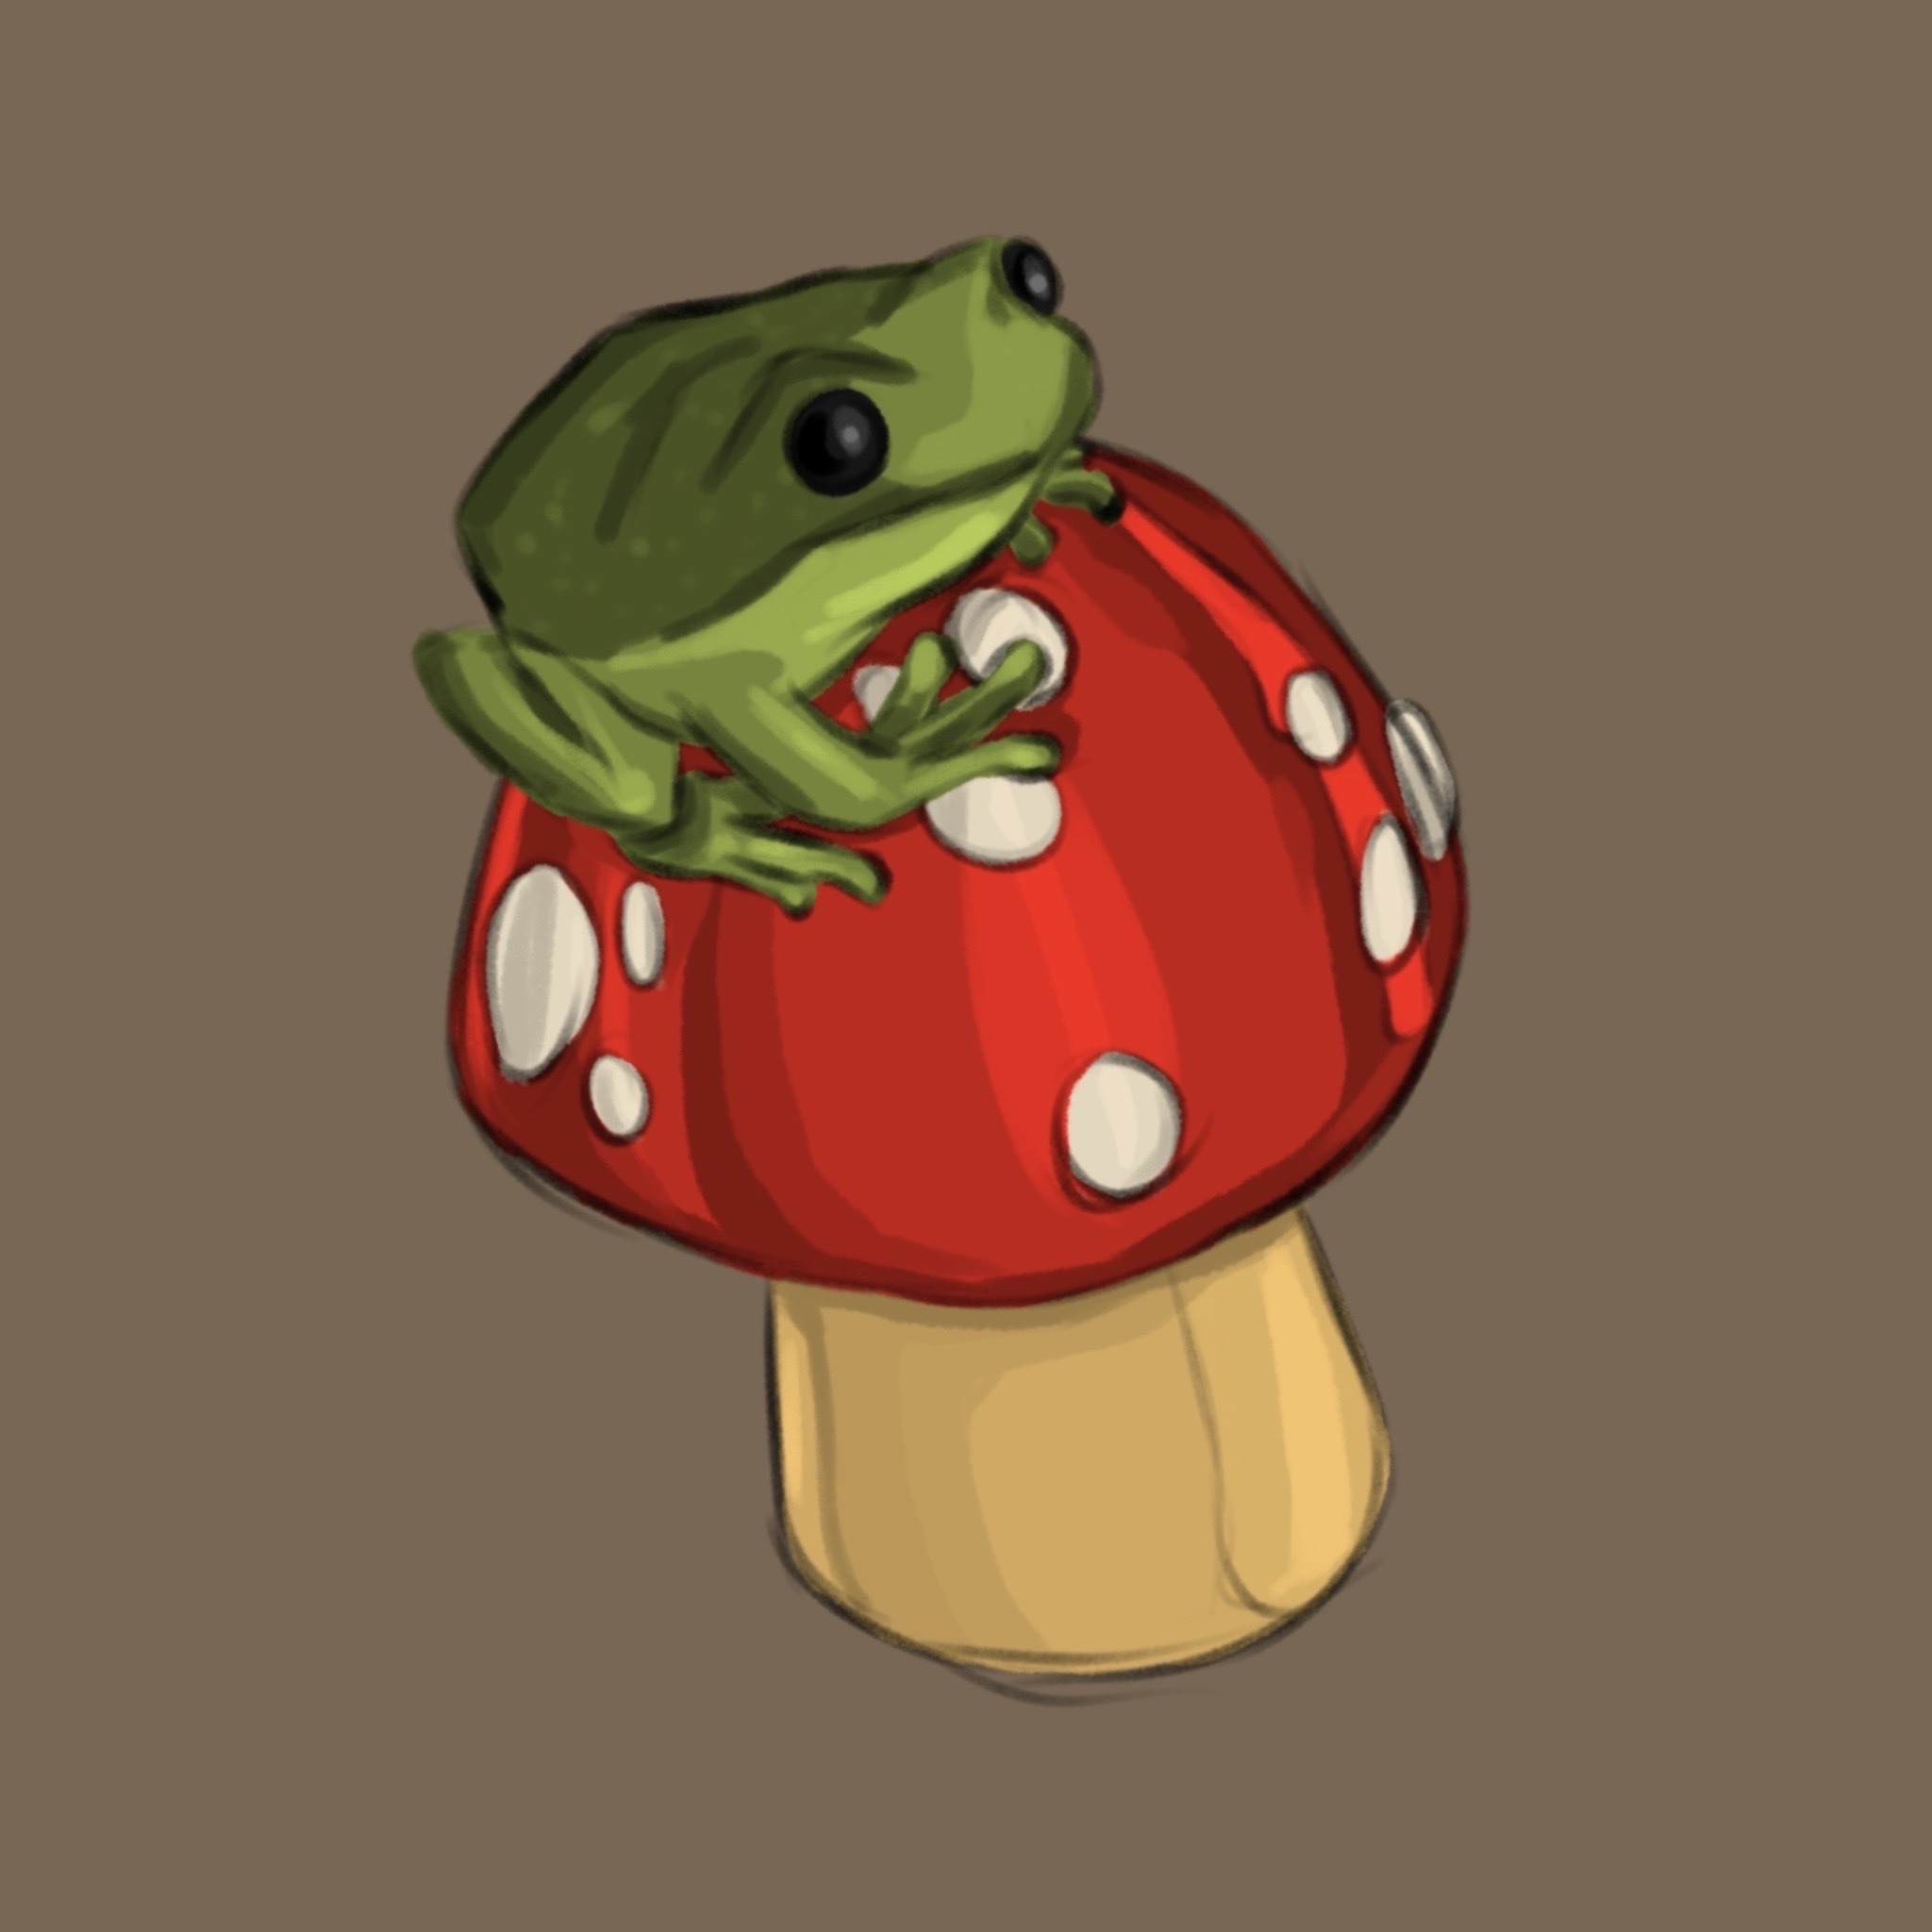 #frog art on Tumblr